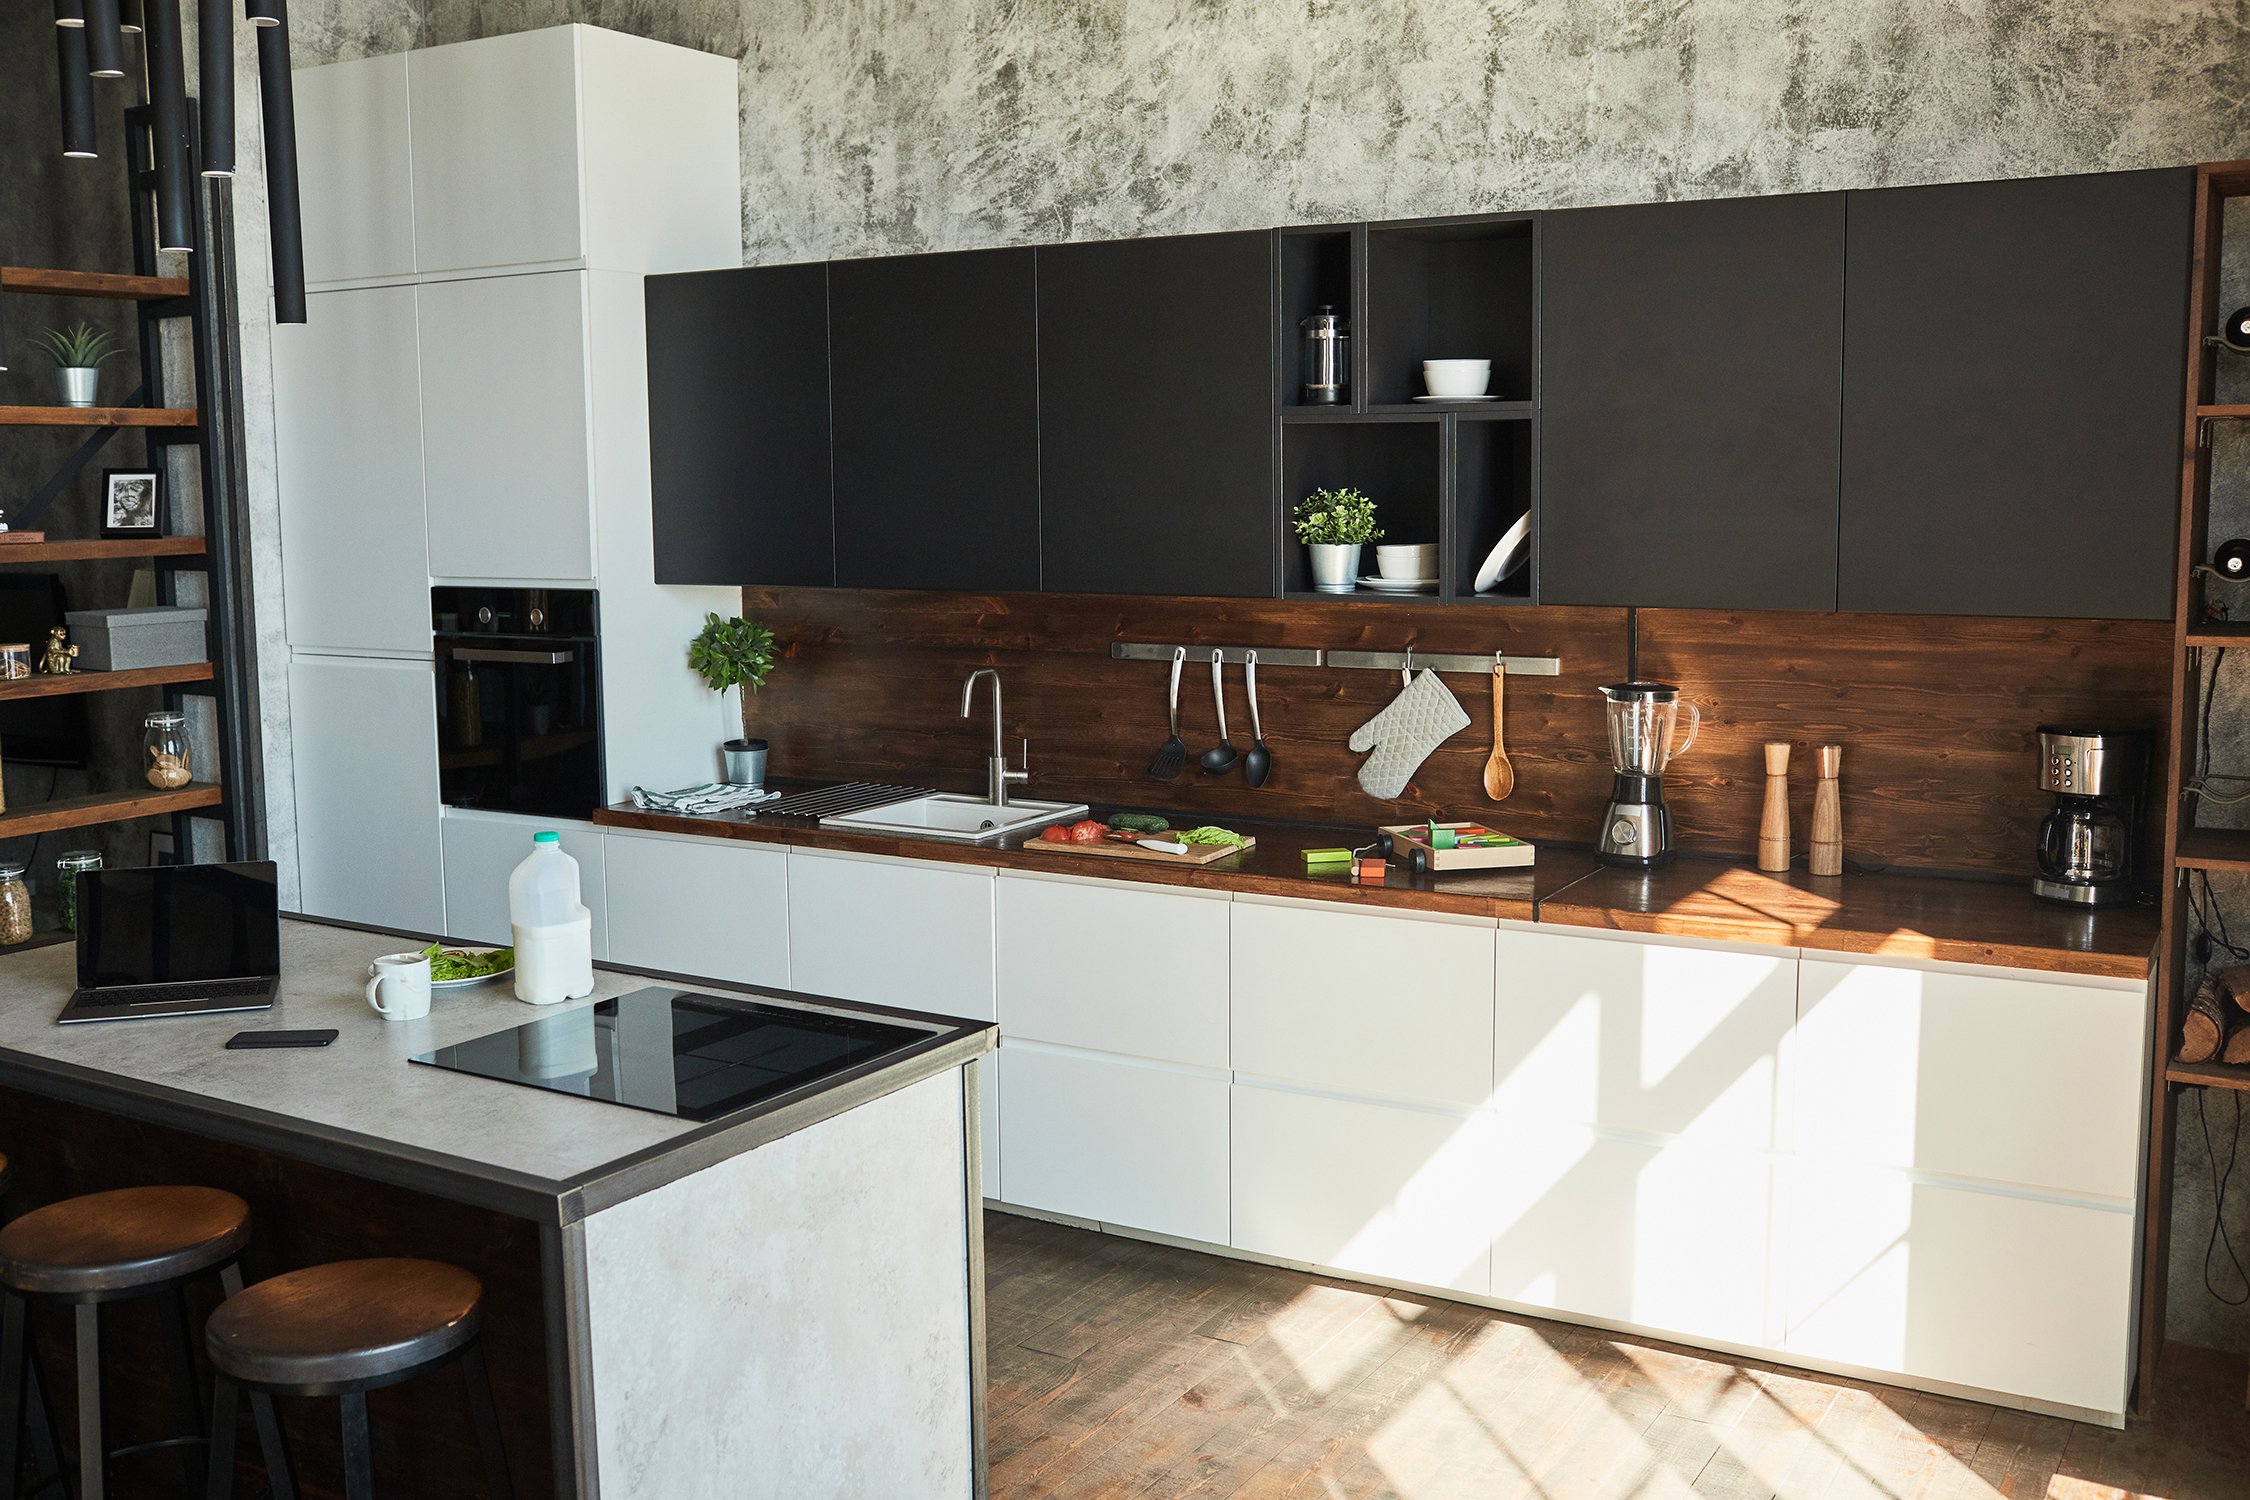 minimal-kitchen-interior-2021-09-24-04-21-31-utc.jpg